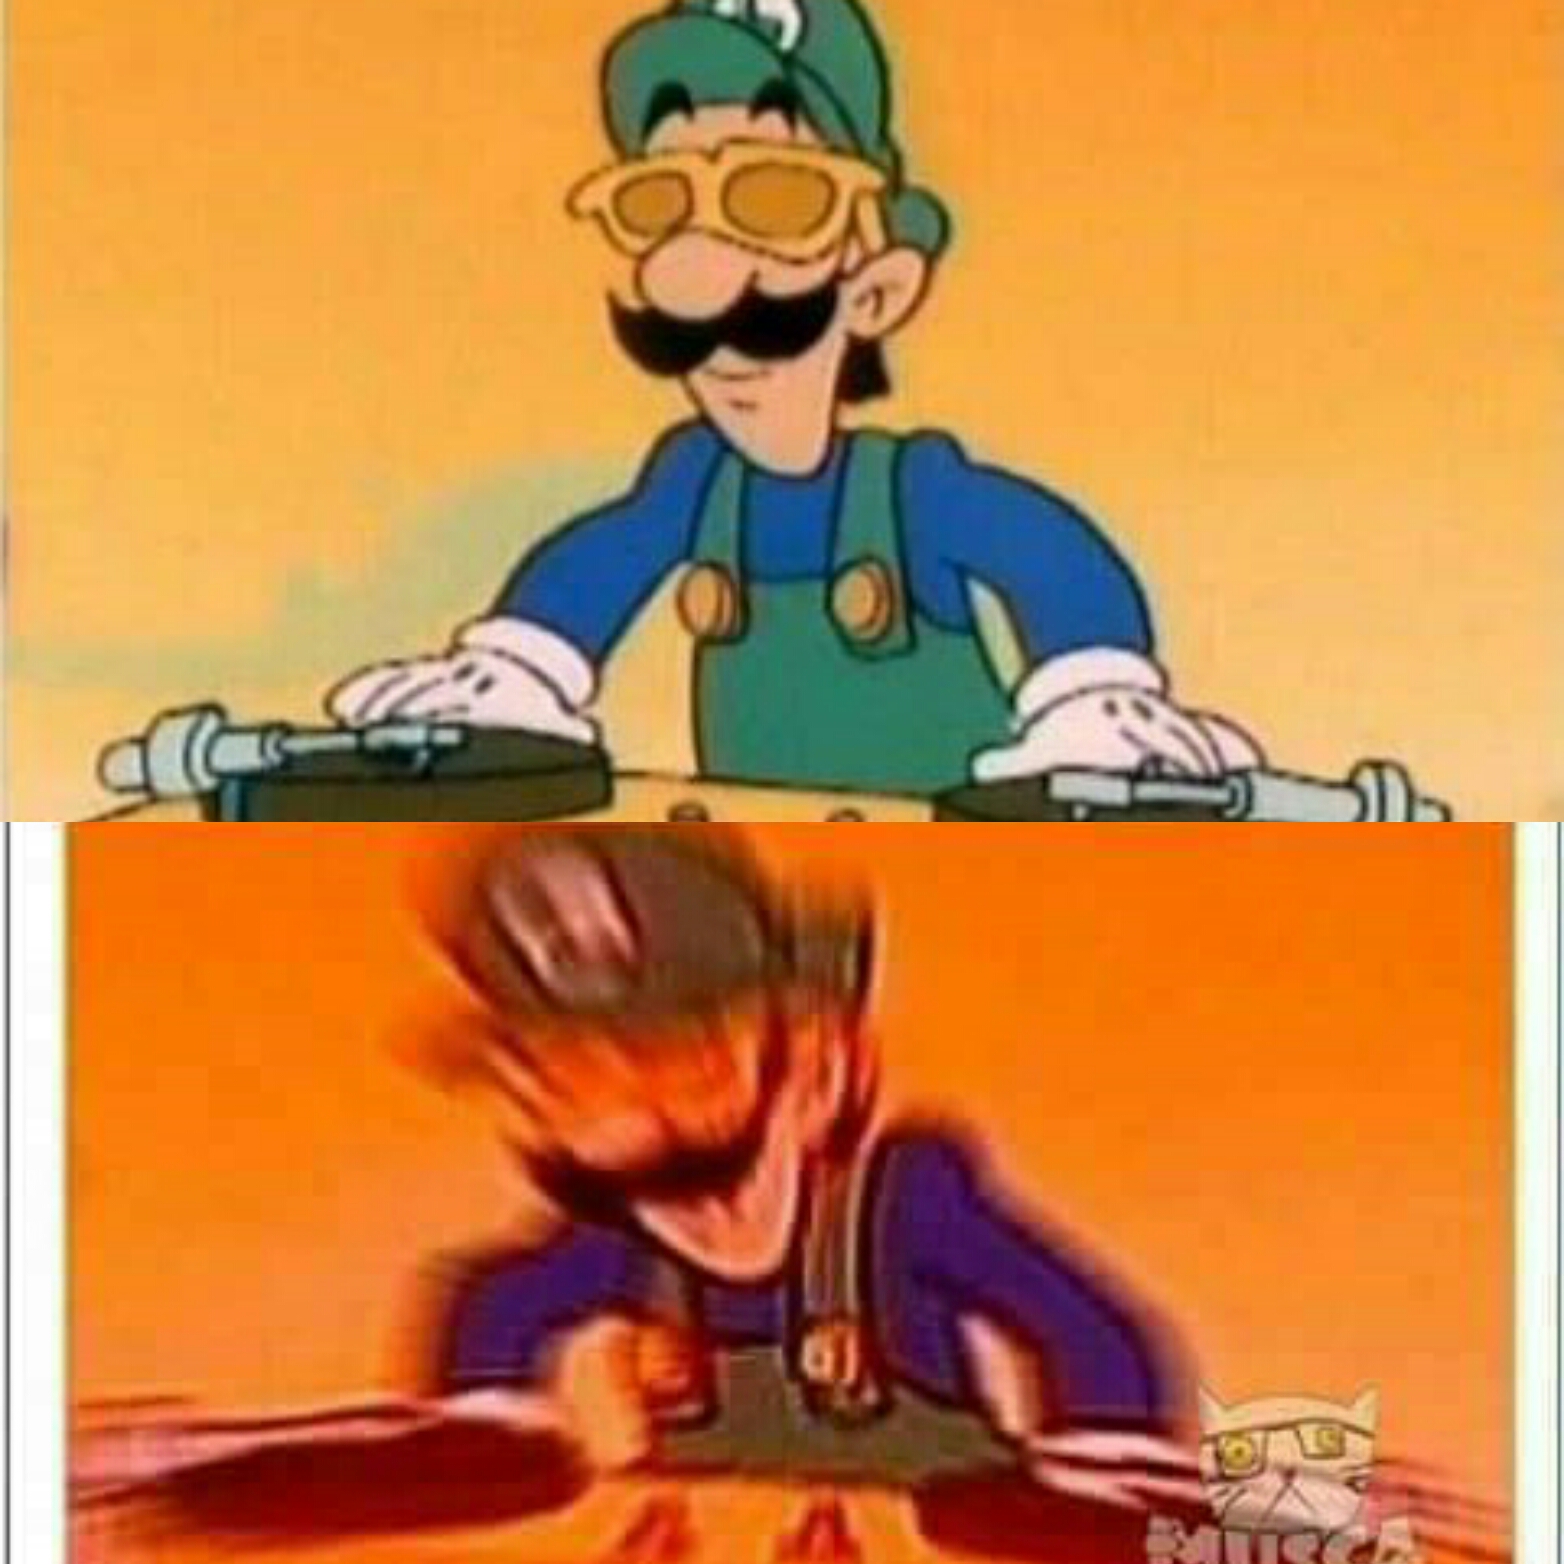 Dj Luigi Meme Generator. 